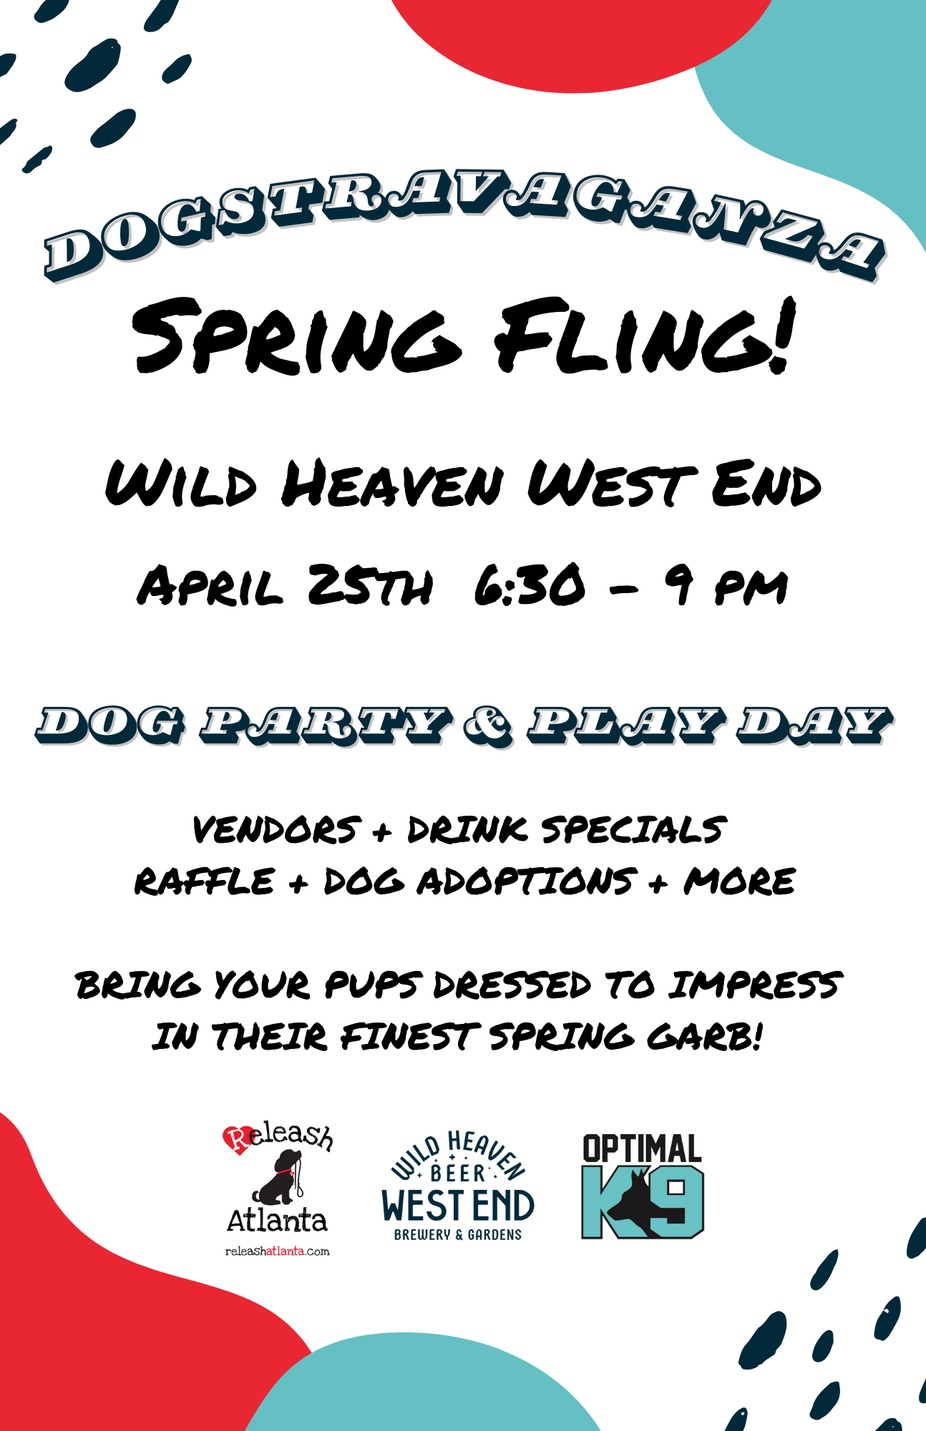 Dogstravaganza Spring Fling event photo